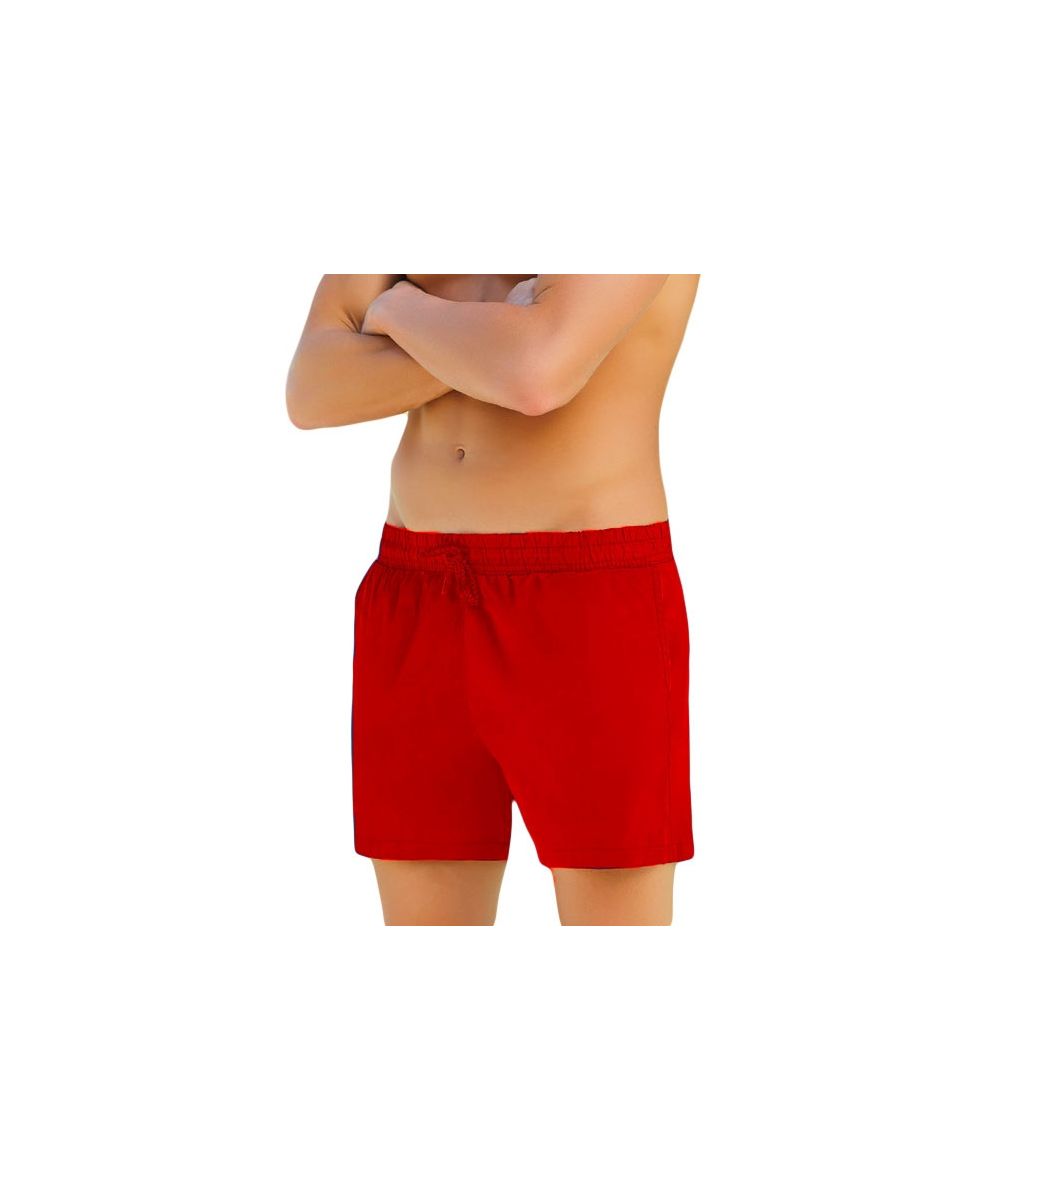 Men swimwear sorts, red